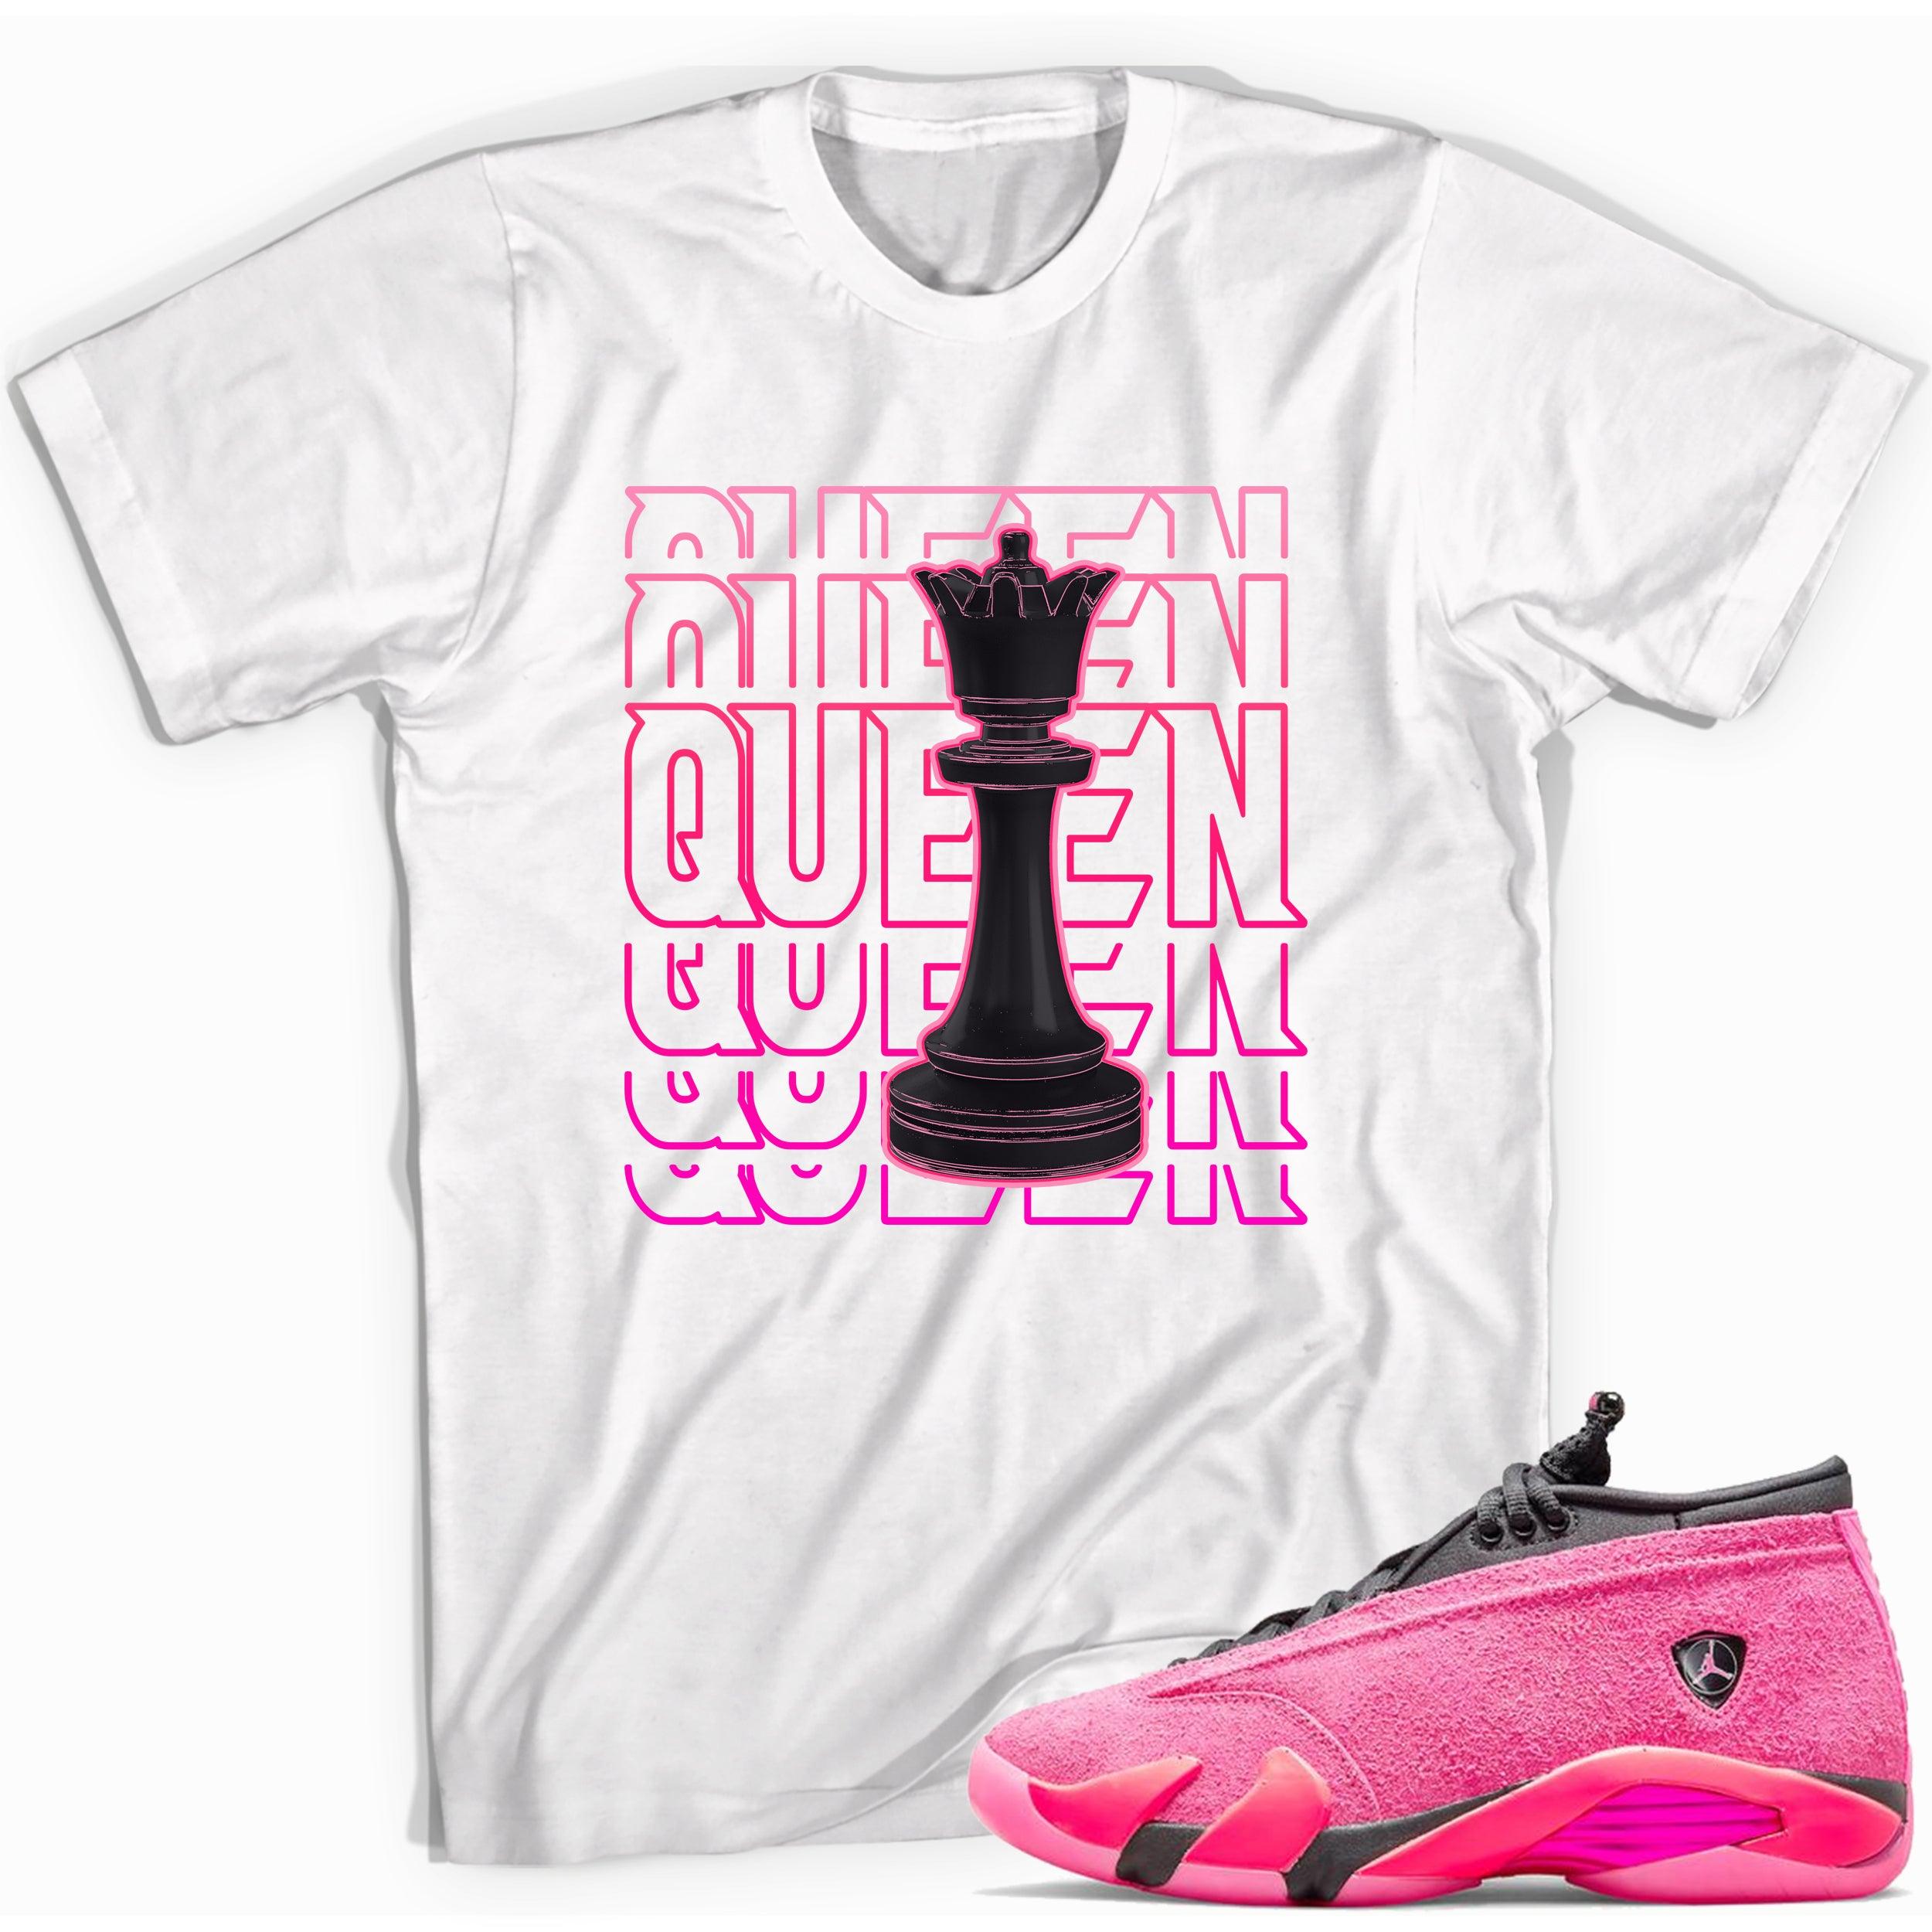 Queen Sneaker Tee AJ 14s Low Shocking Pink photo